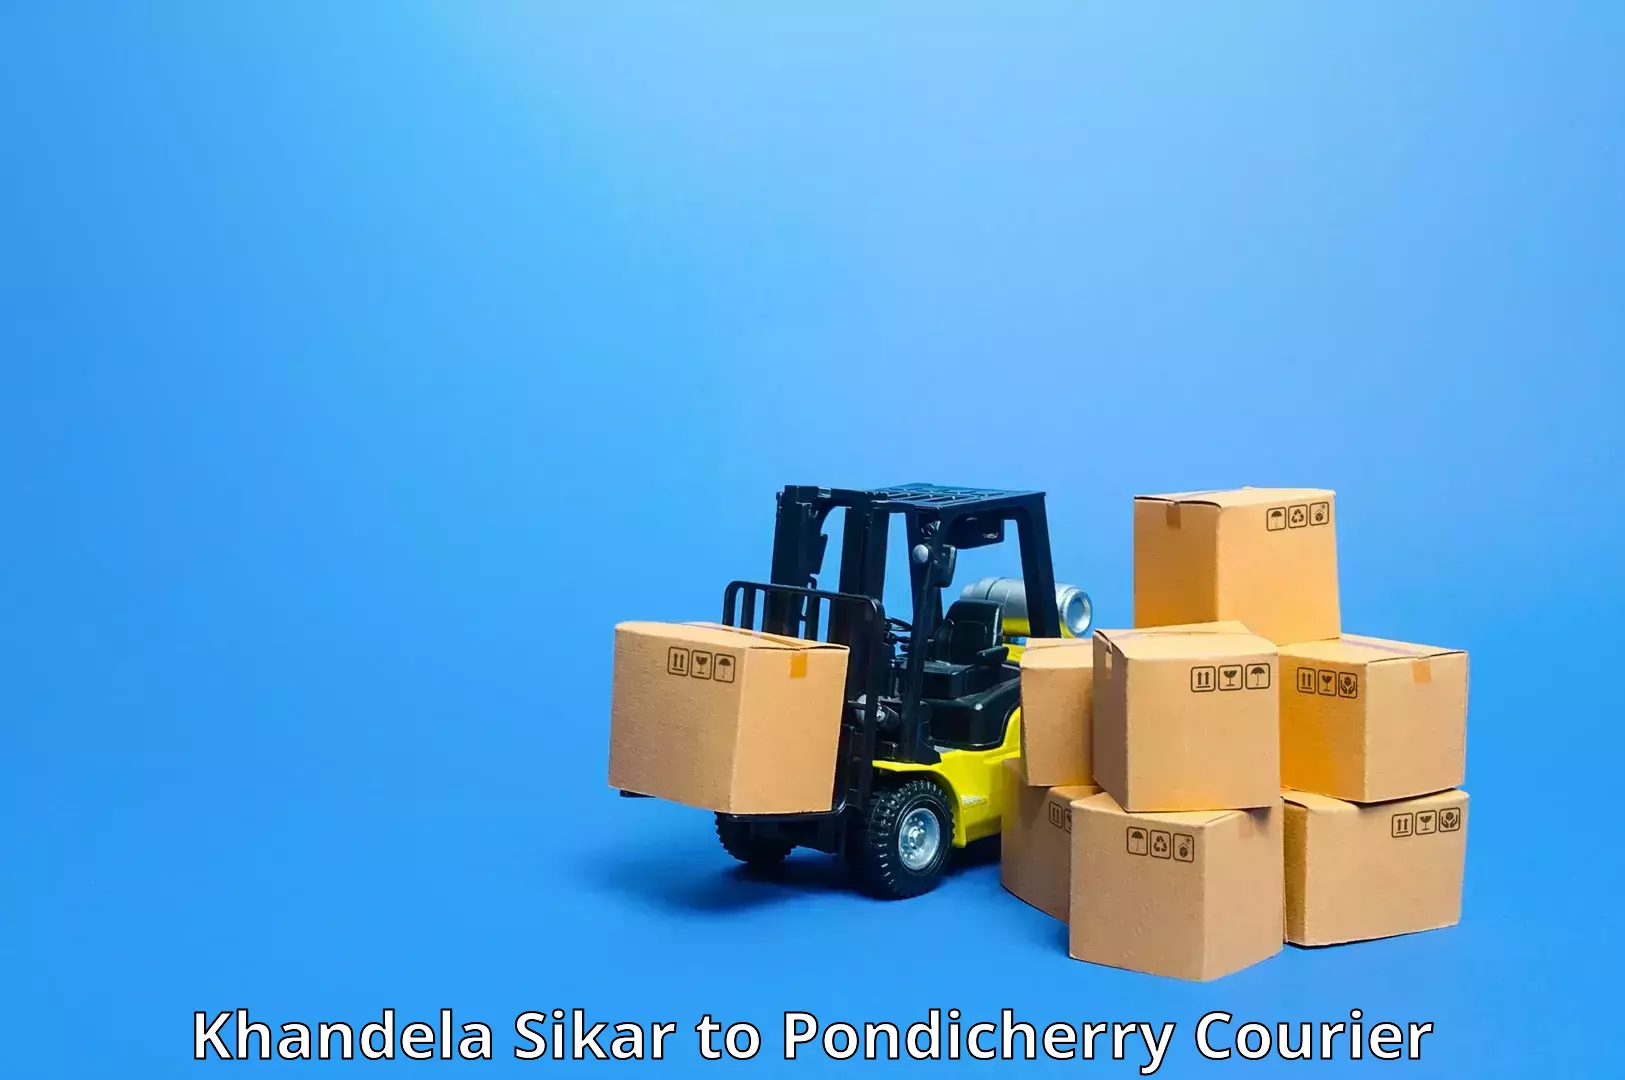 Speedy delivery service Khandela Sikar to Karaikal